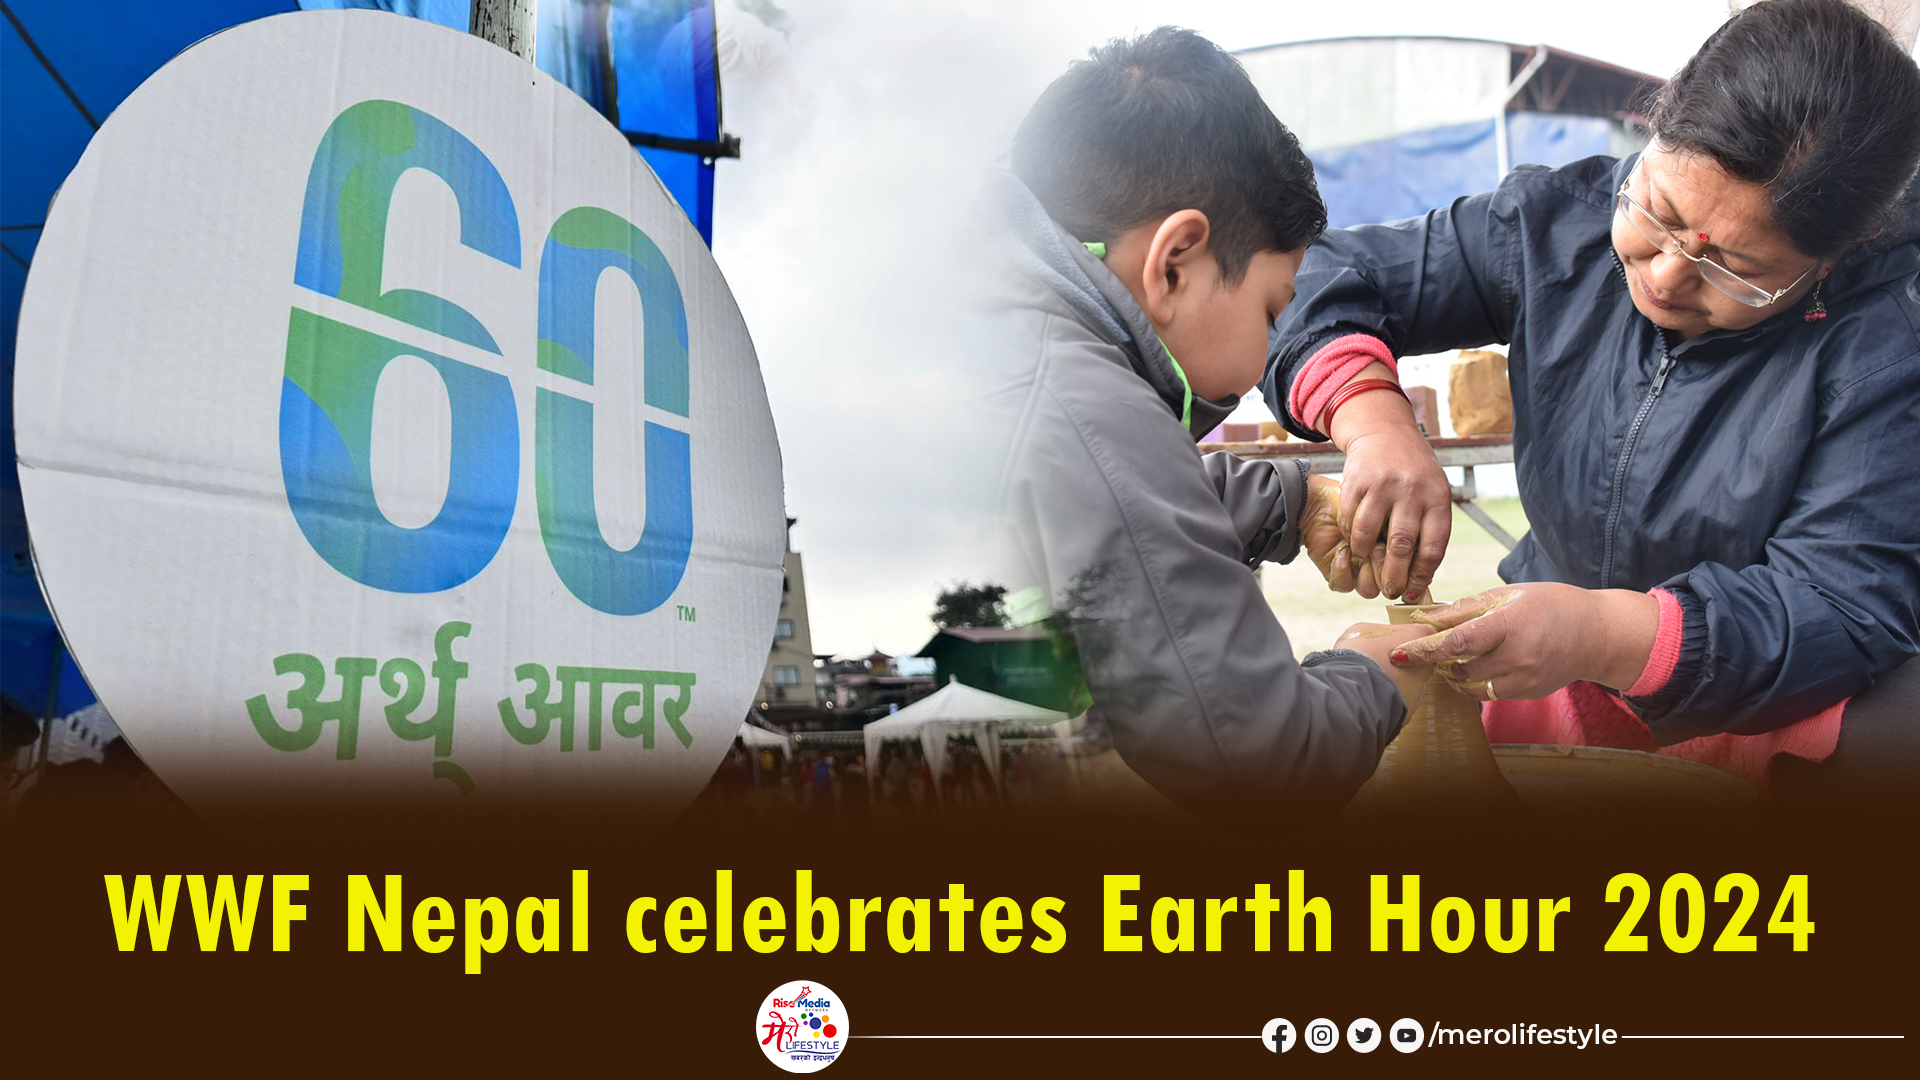 WWF Nepal celebrates Earth Hour 2024 with an Eco Fiesta!